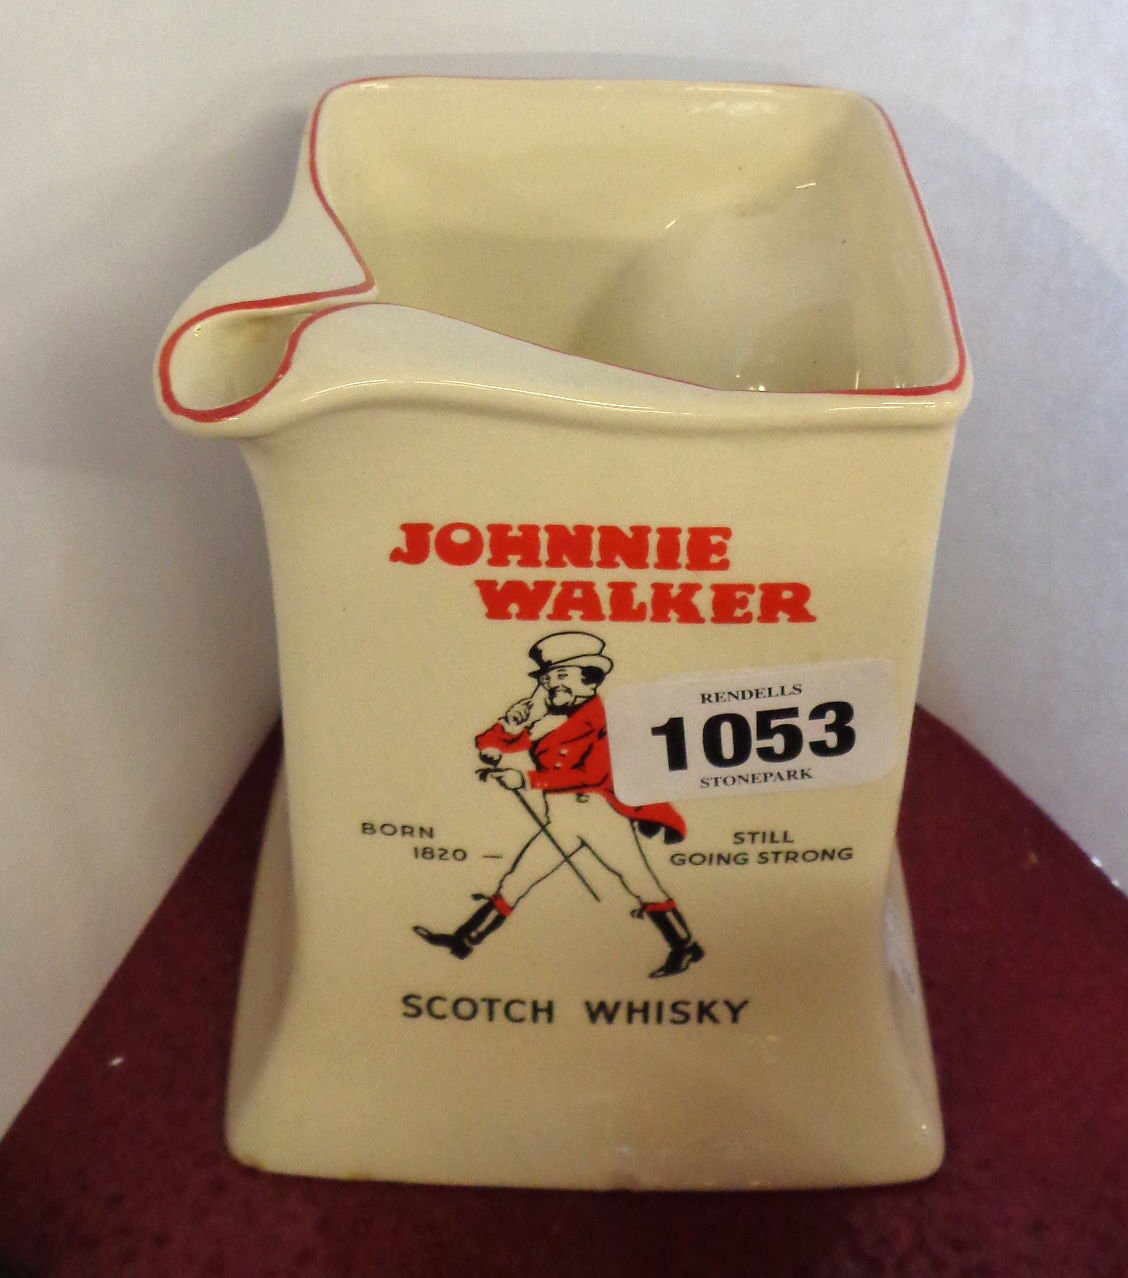 A vintage Wade Regicor pub water jug advertising Johnnie Walker Scotch Whisky